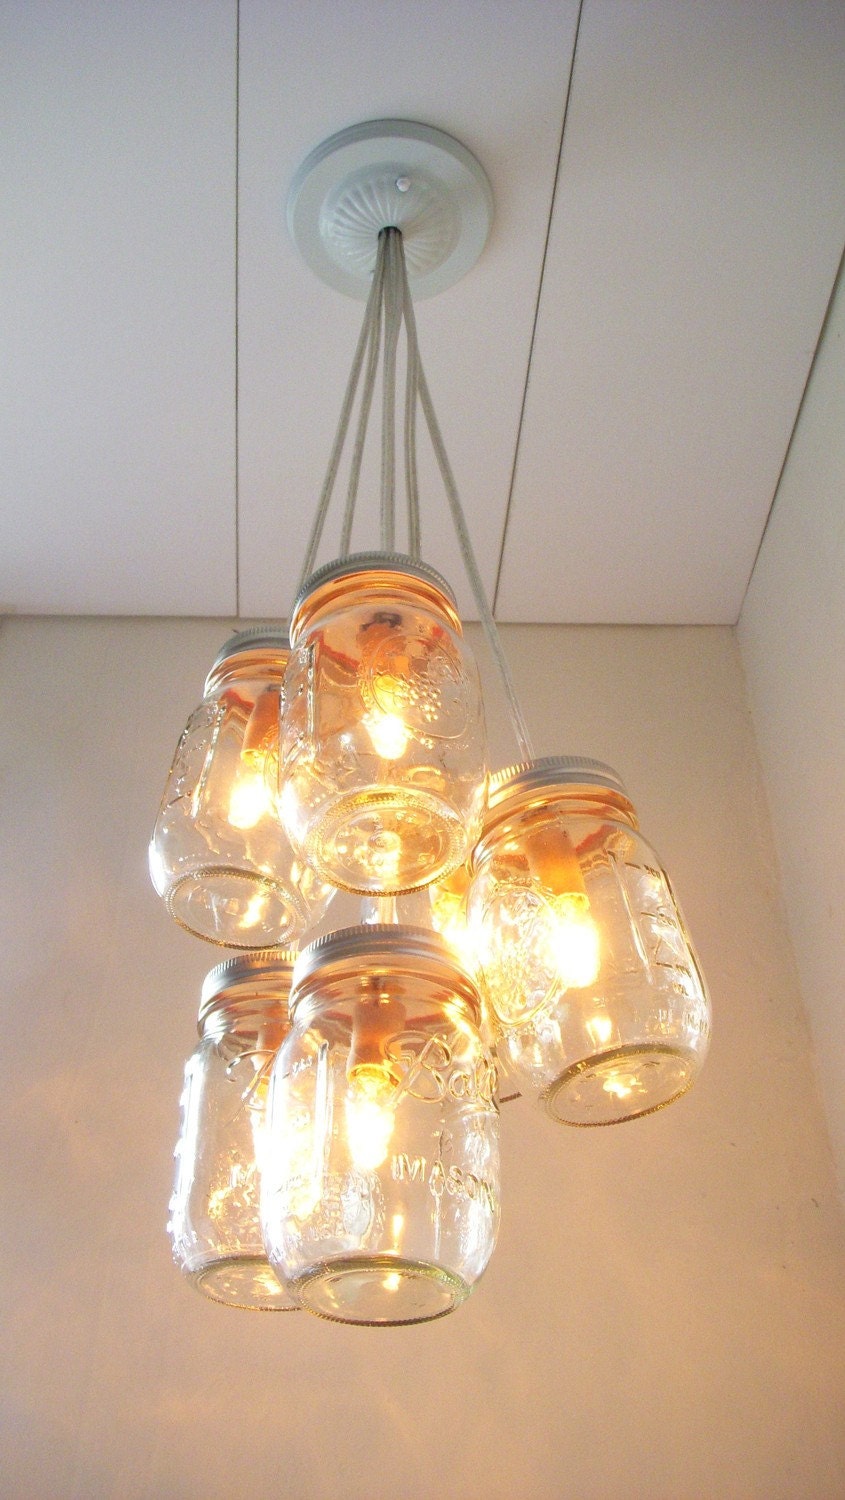 Autumn's Glow - Mason Jar Chandelier Lighting Fixture Mason Jar Lighting - Mason Jar Wedding Accent Light - BootsNGus Chandelier Lamp Design